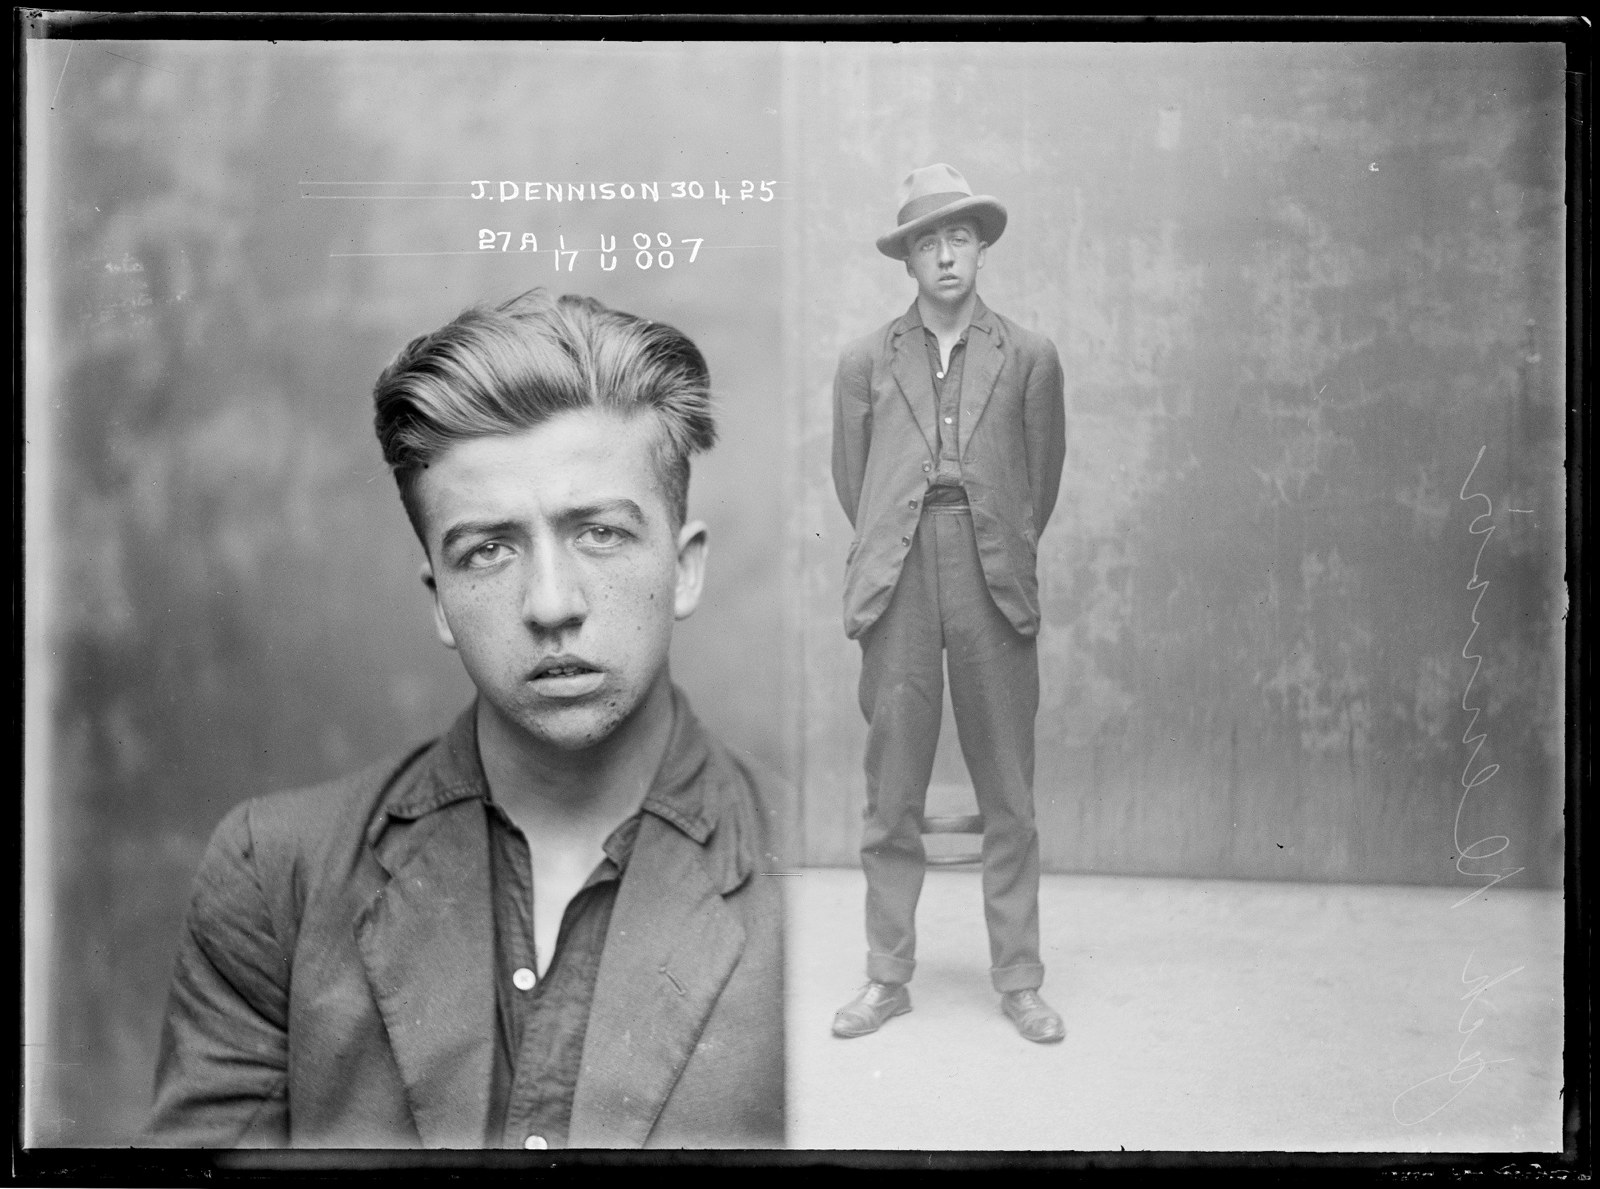 Jack Dennison, special photograph number 27a, 30th April 1925, probably Central Police Station, Sydney